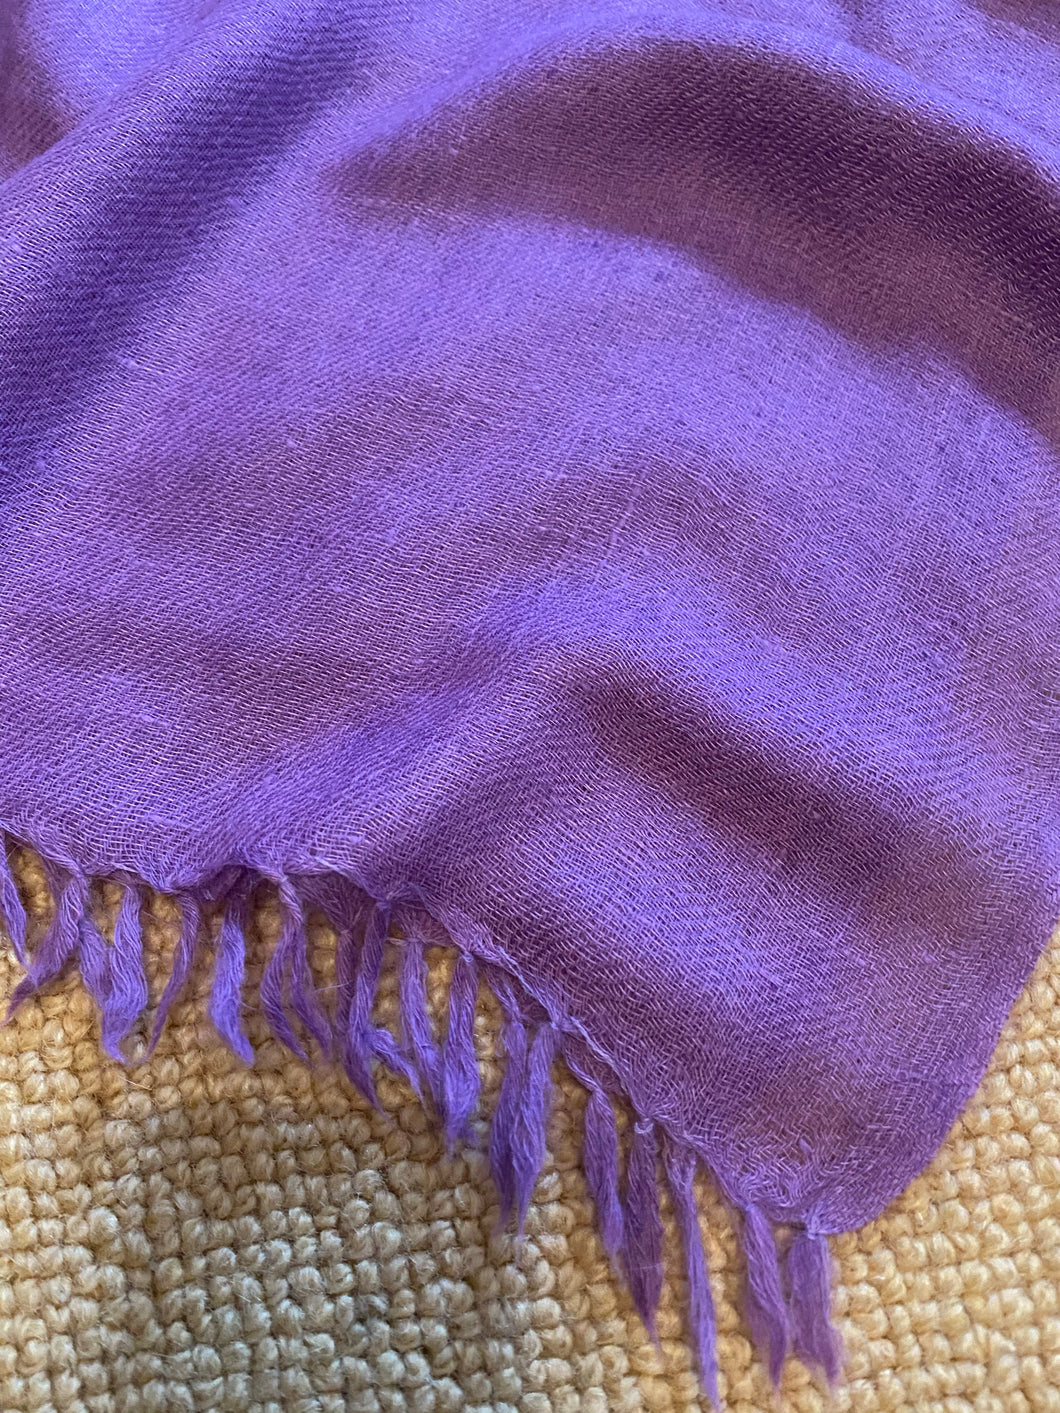 SU124 Lavender, plain wool, long scarf